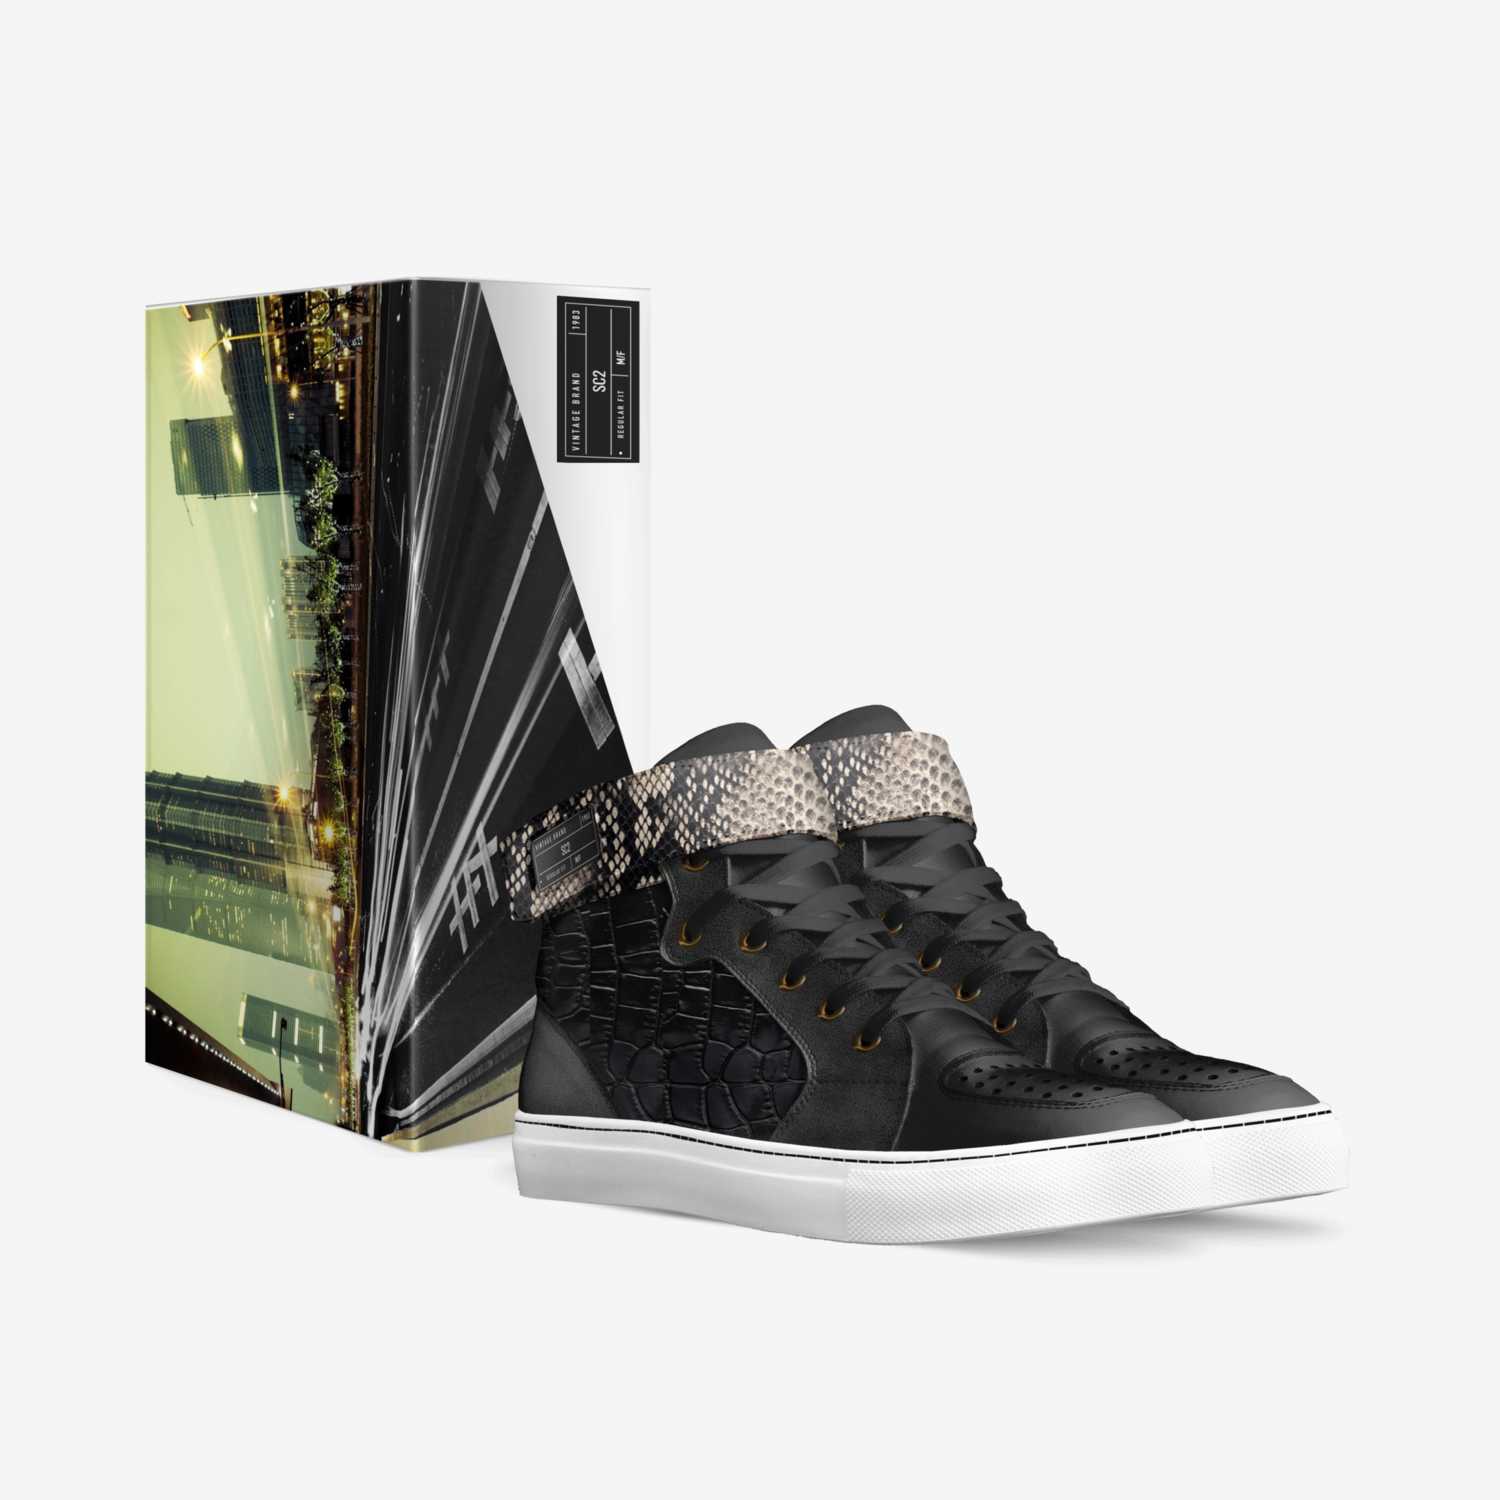 SC2 custom made in Italy shoes by Gavino Nishio | Box view